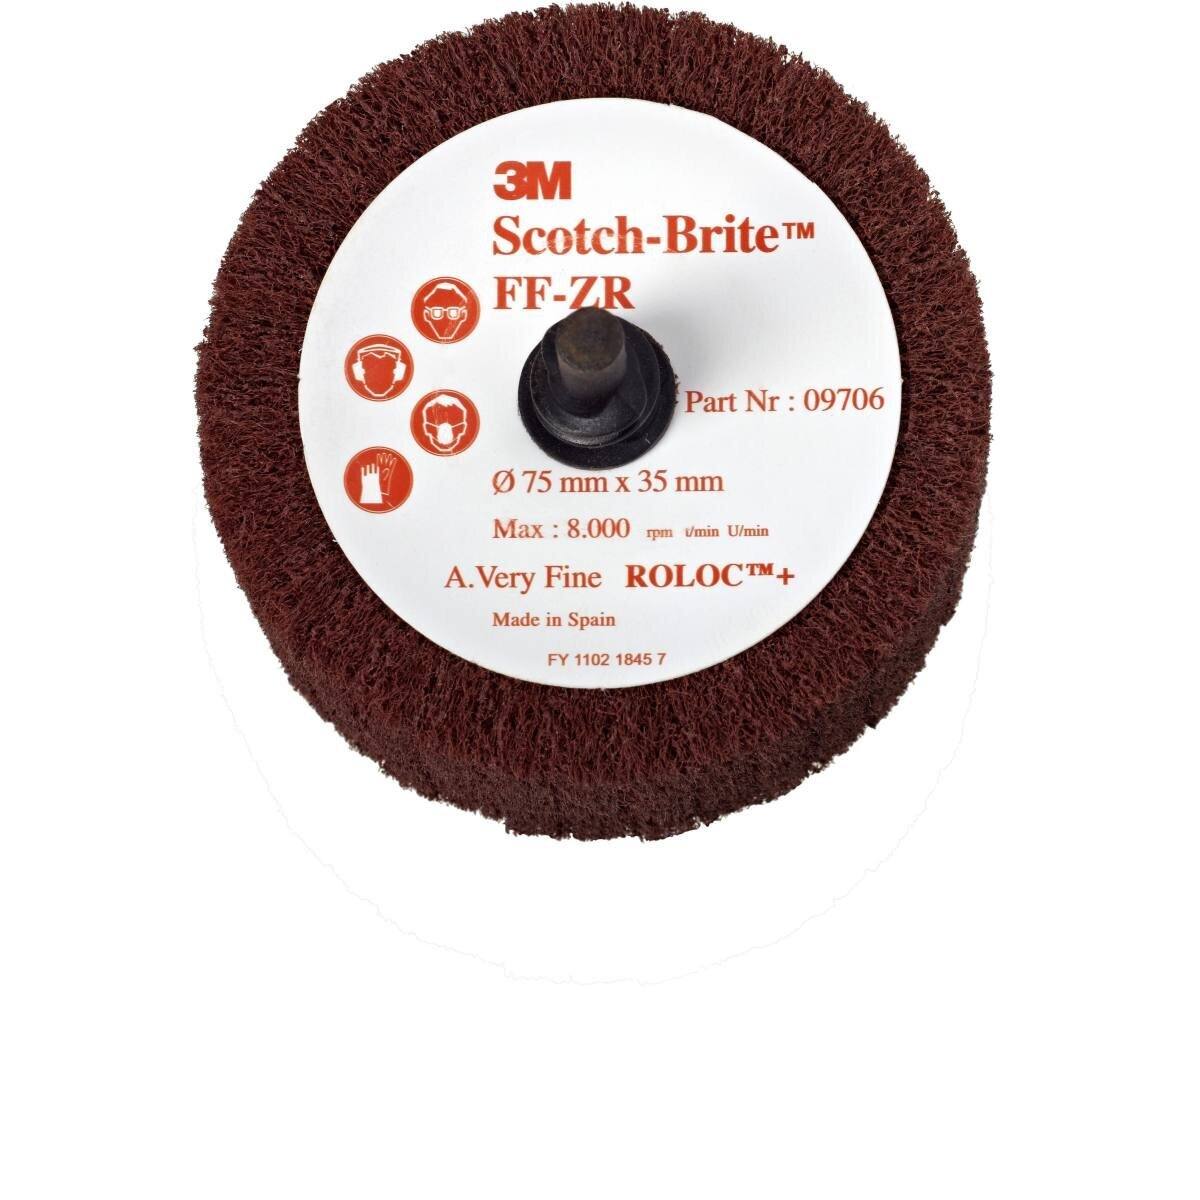 3M Scotch-Brite Roloc pincel para solapas FF-ZR, rojo-marrón, 50,8 mm, 25 mm, A, muy fino #09704